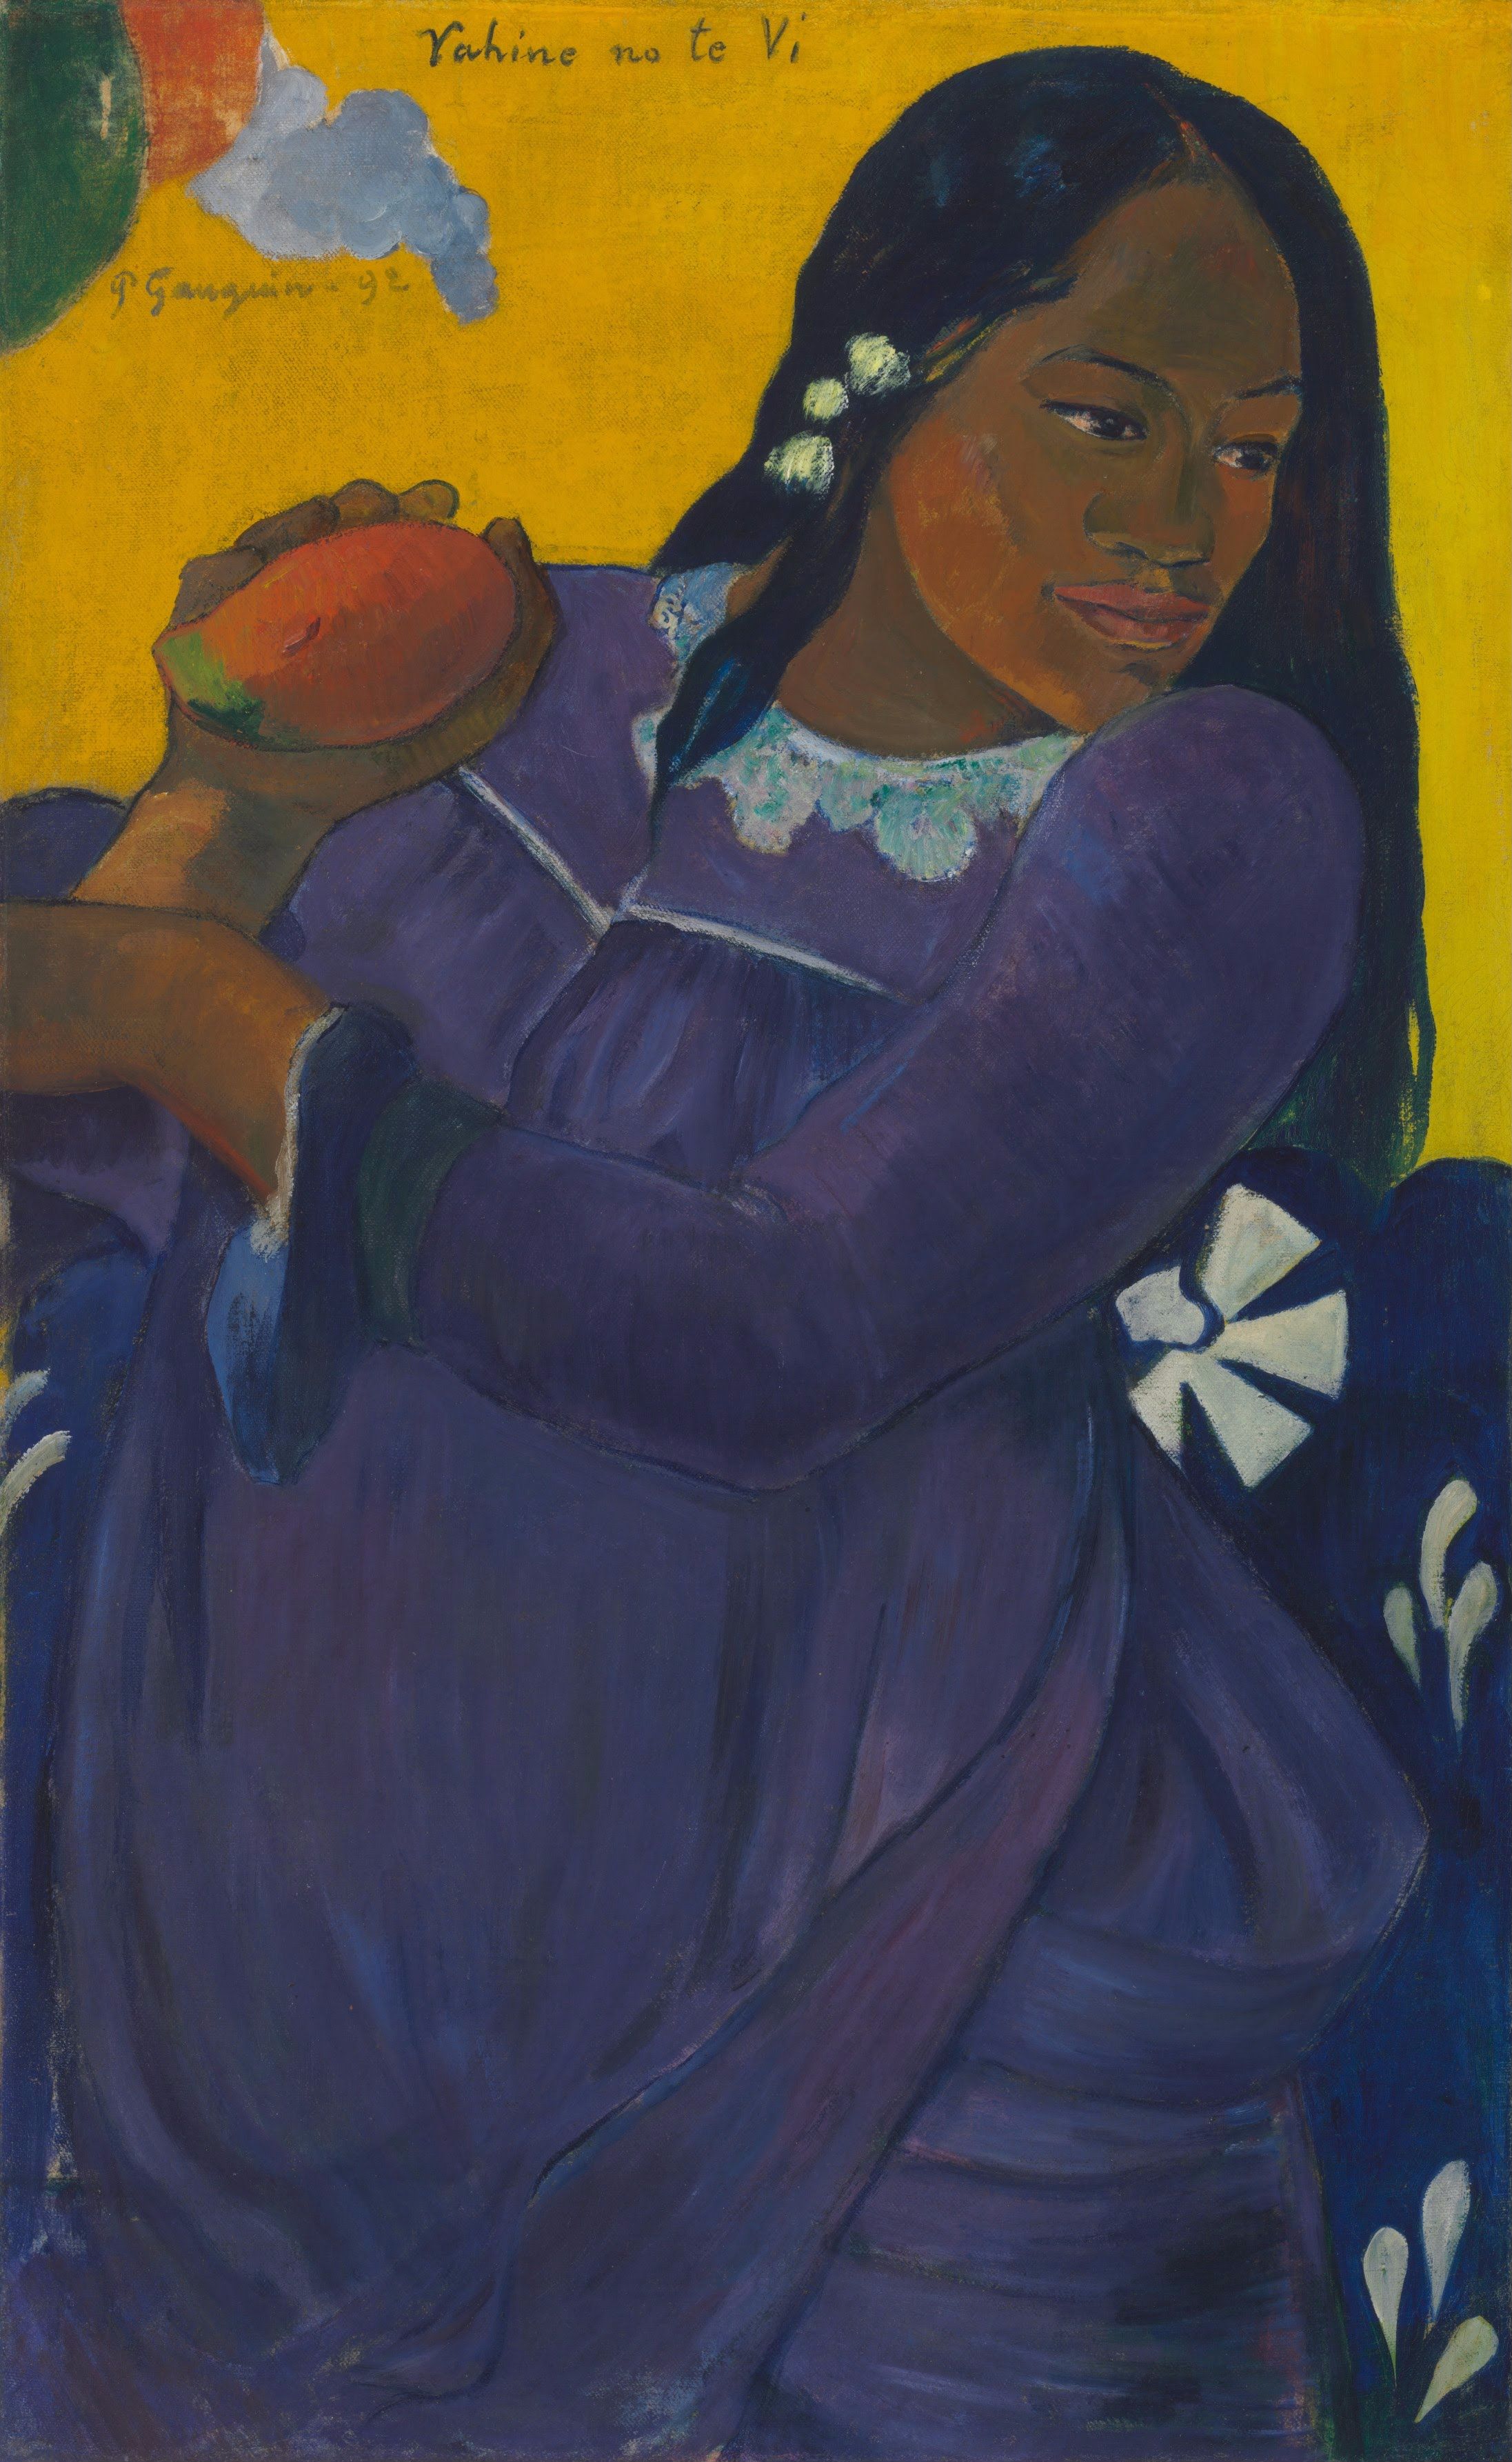 Vahine no te vi (Mulher da Manga) by Paul Gauguin - 1892 - 193.5 x 103 cm 